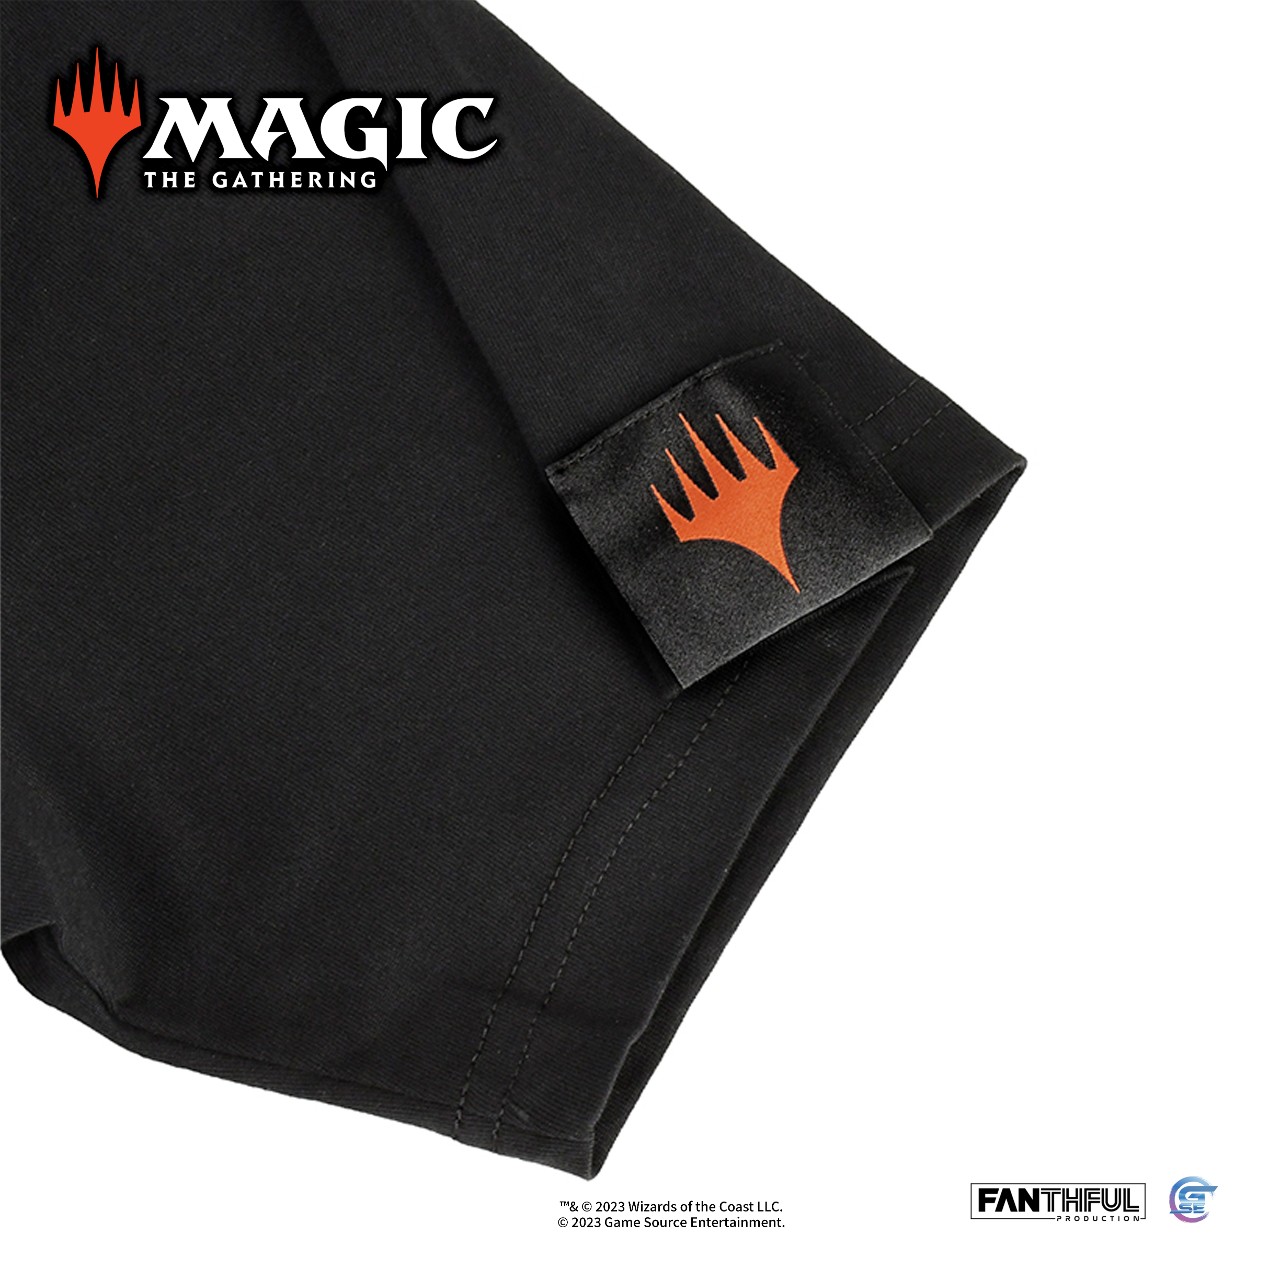 Magic The Gathering_product shot_T-shirt BK_03